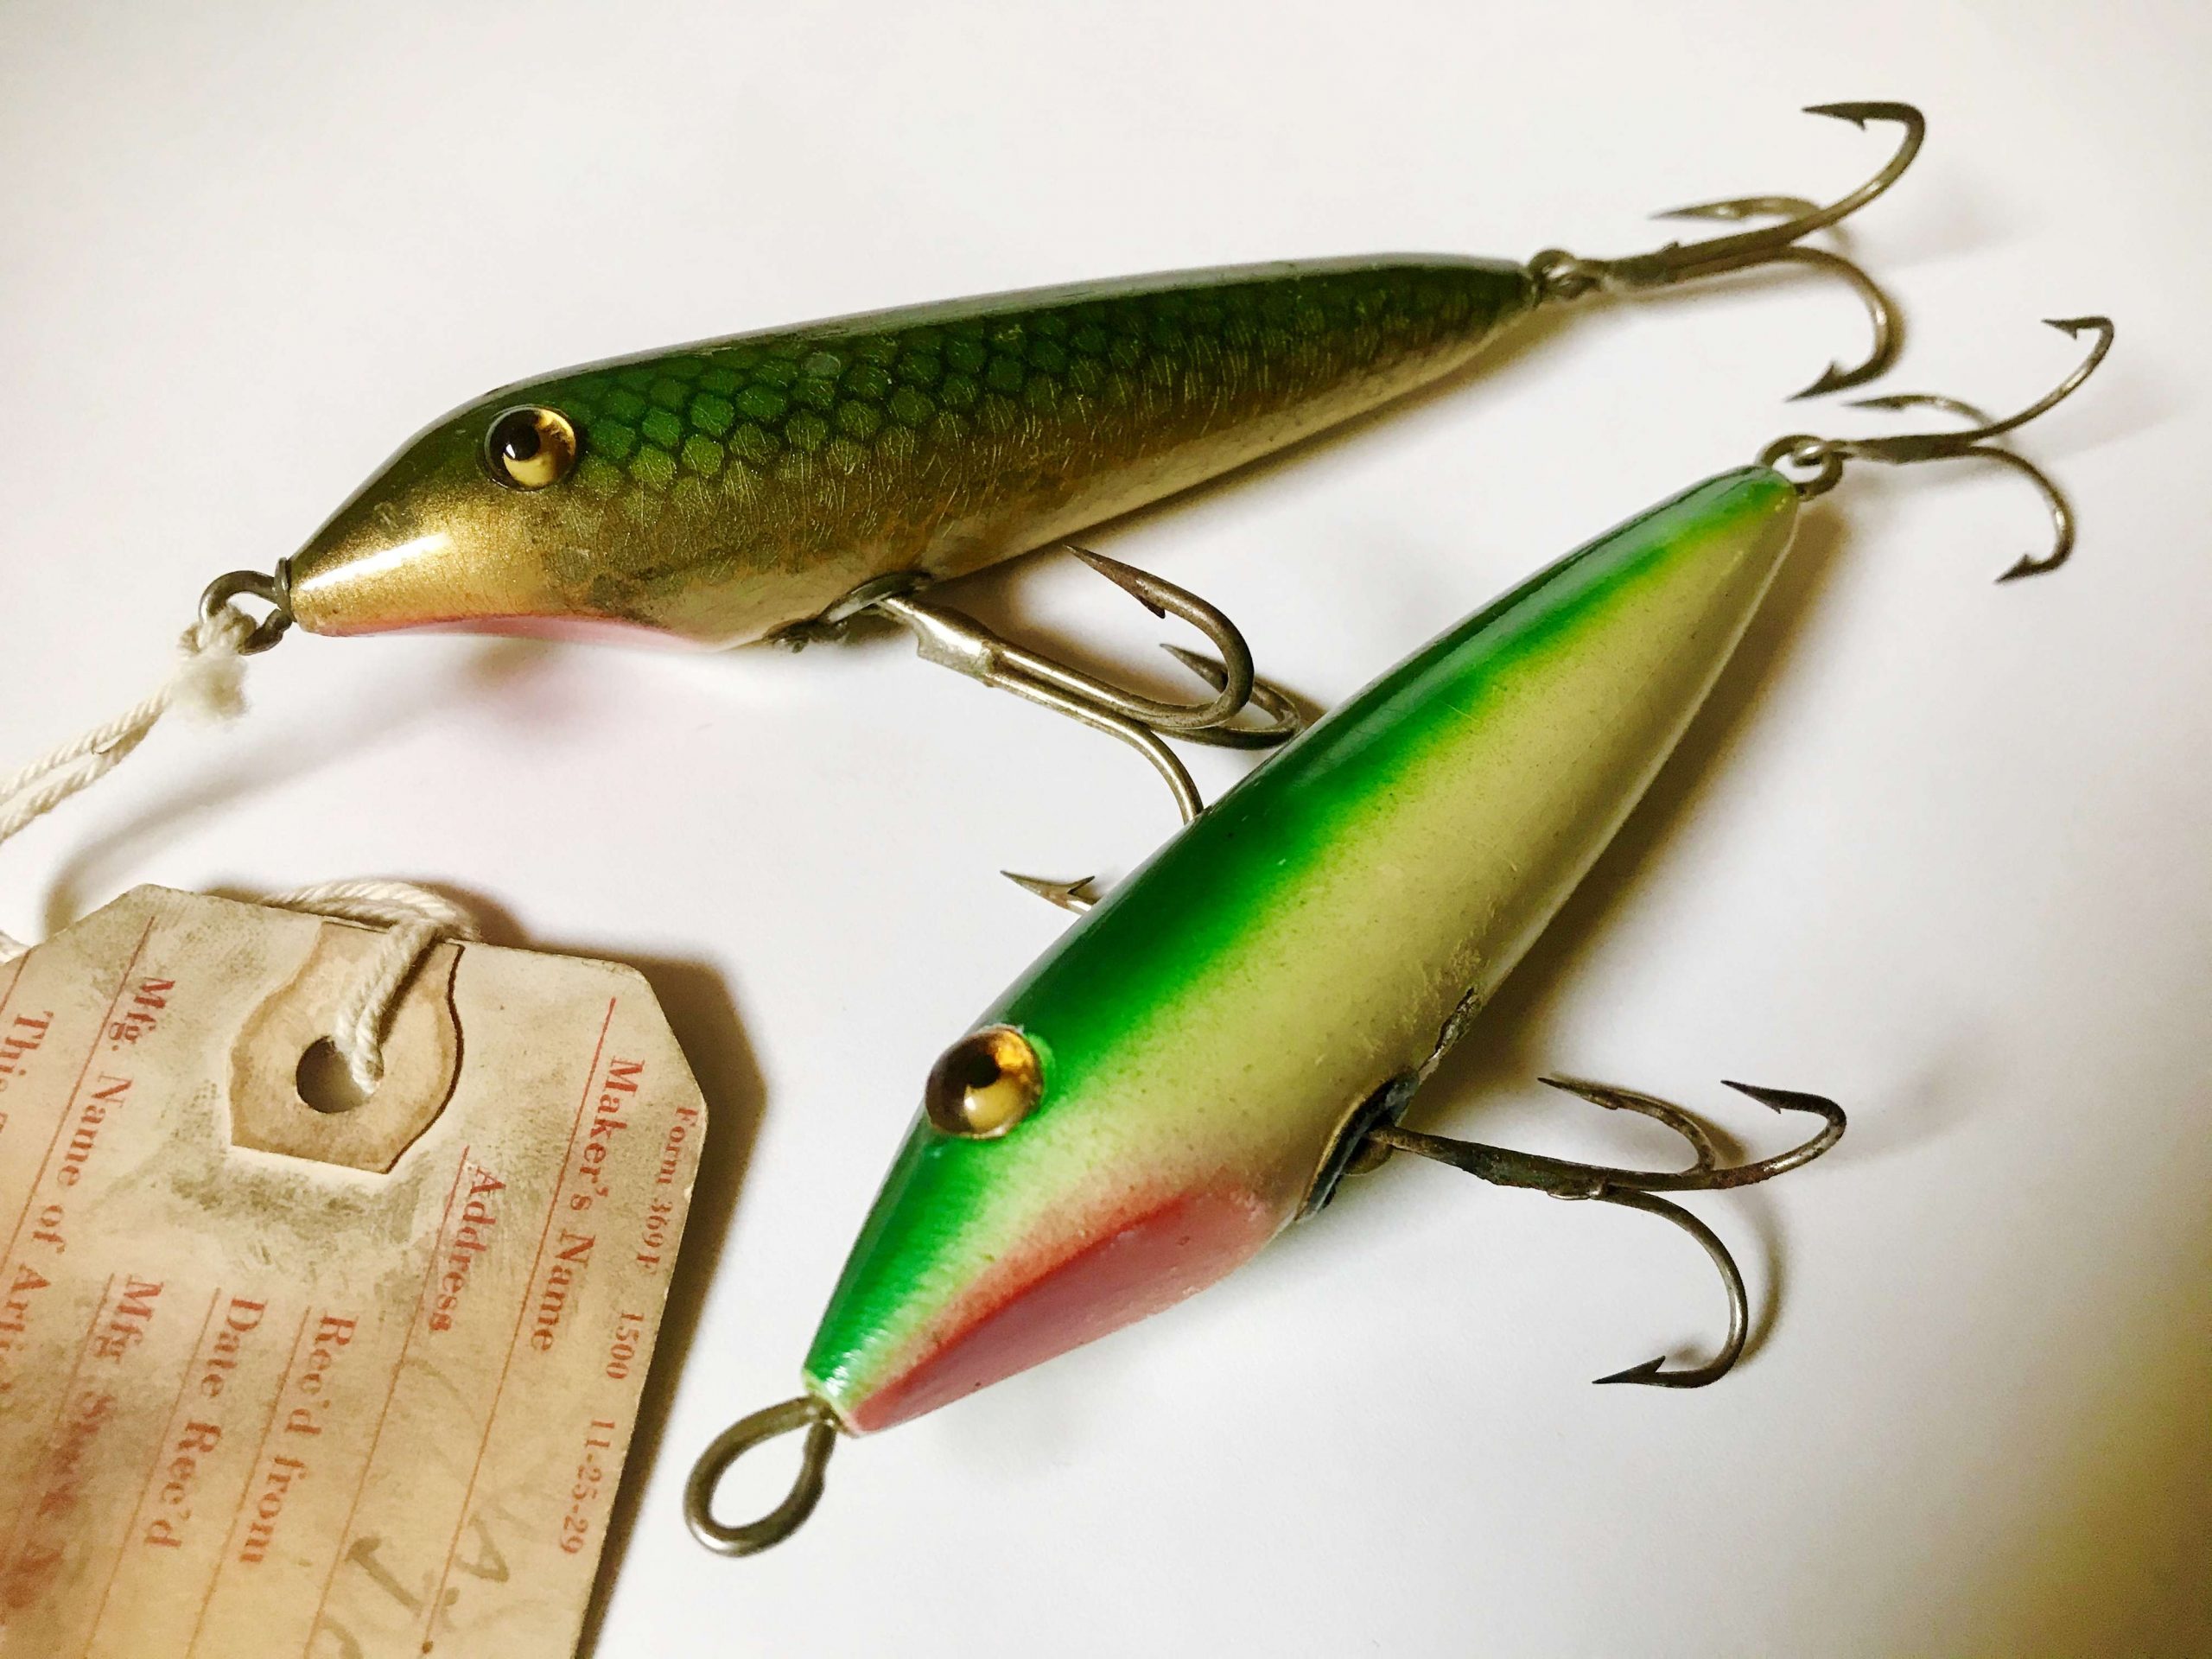 Vintage Heddon Original Zara Spook fishing lure Clear Color NOS